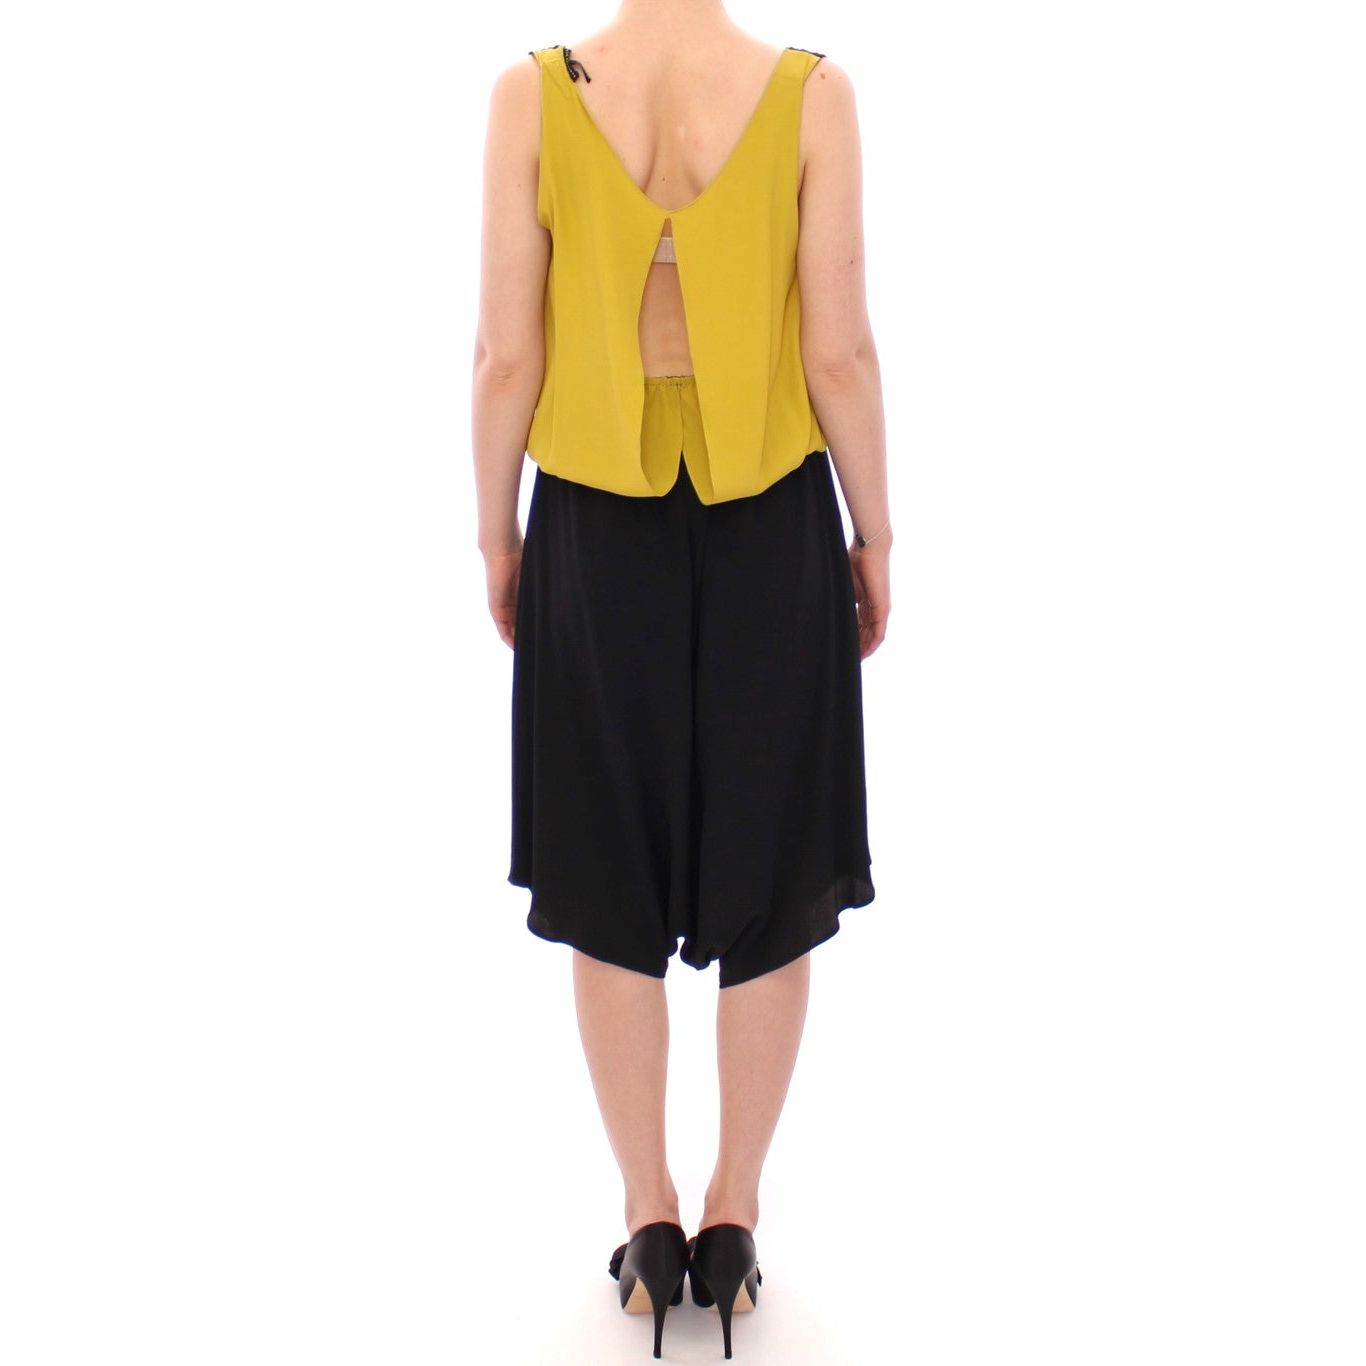 Lamberto Petri Elegant Silk Blend Shift Dress in Black and Yellow black-yellow-silk-shift-sheath-coctail-dress 218495-black-yellow-silk-shift-sheath-coctail-dress-2_285ae8a5-7fa9-4407-8994-79d6d578f941.jpg